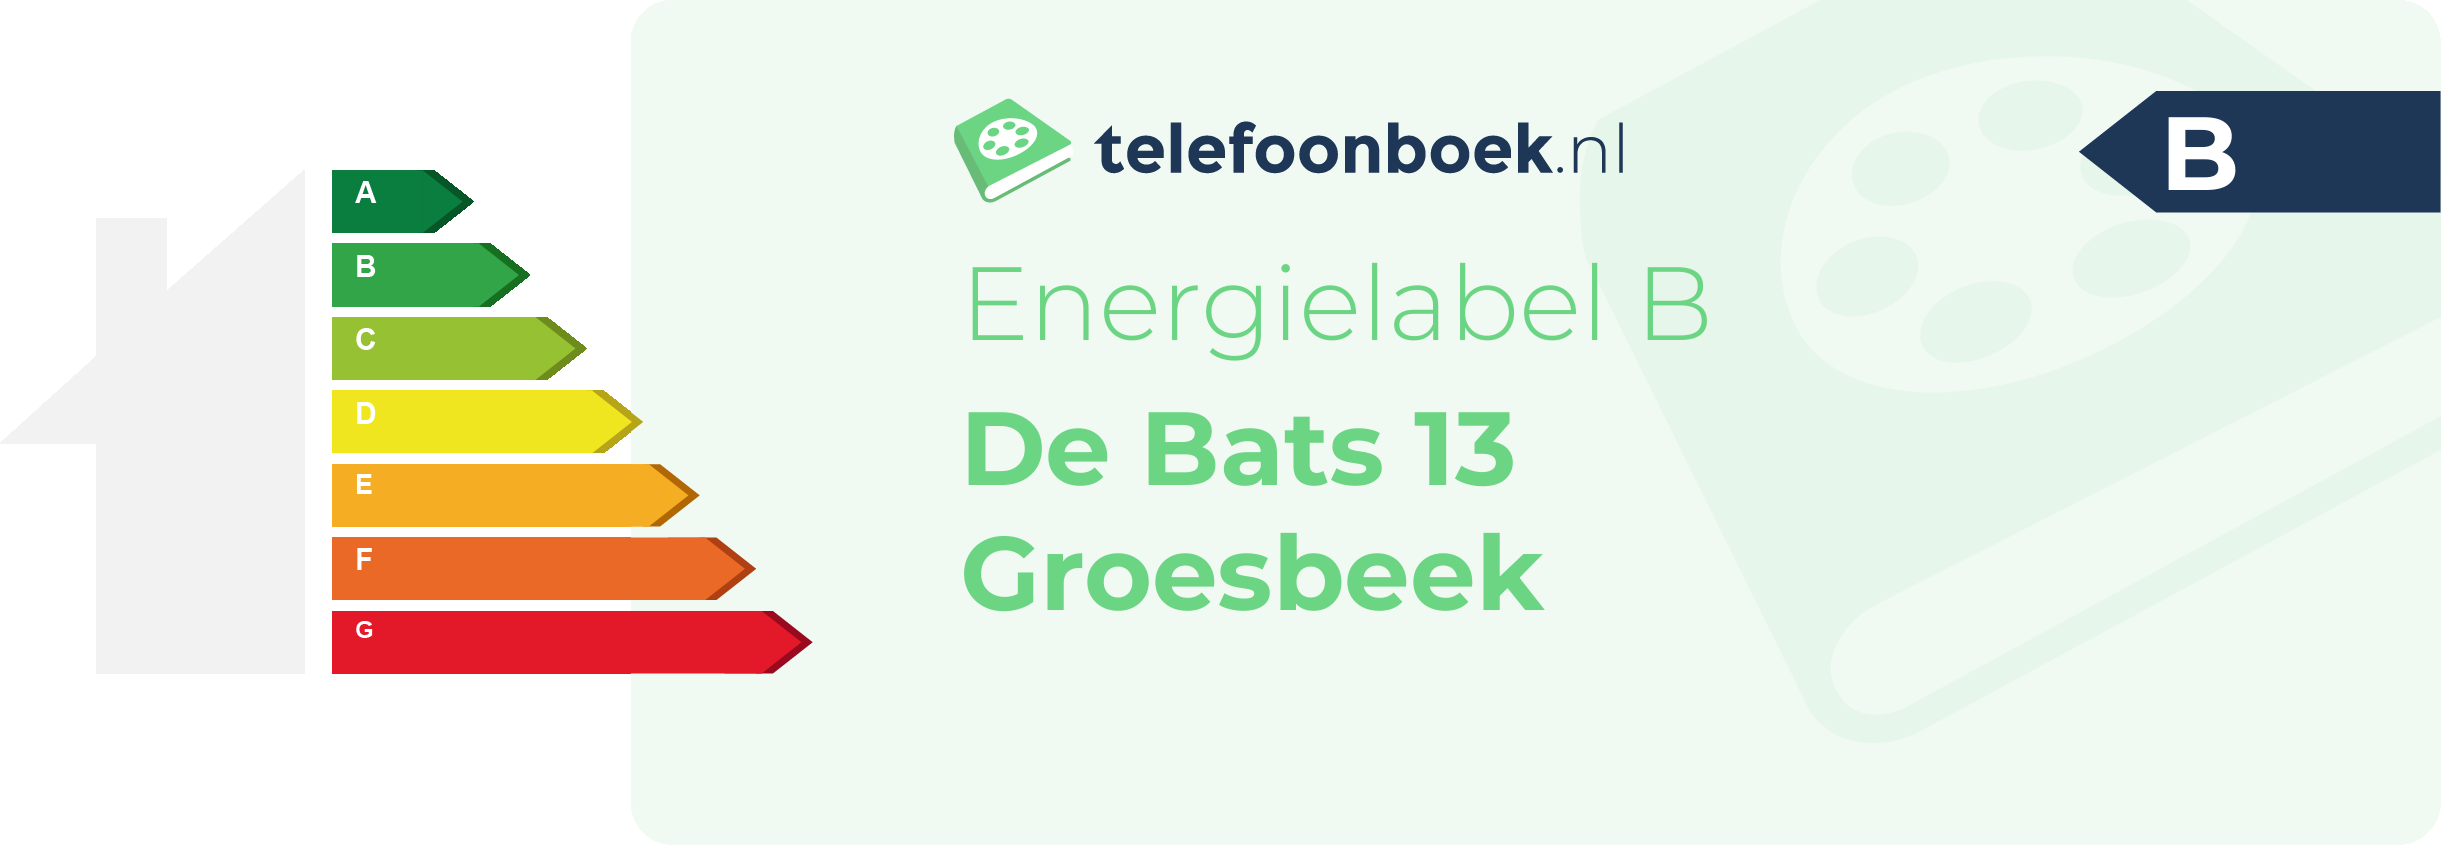 Energielabel De Bats 13 Groesbeek